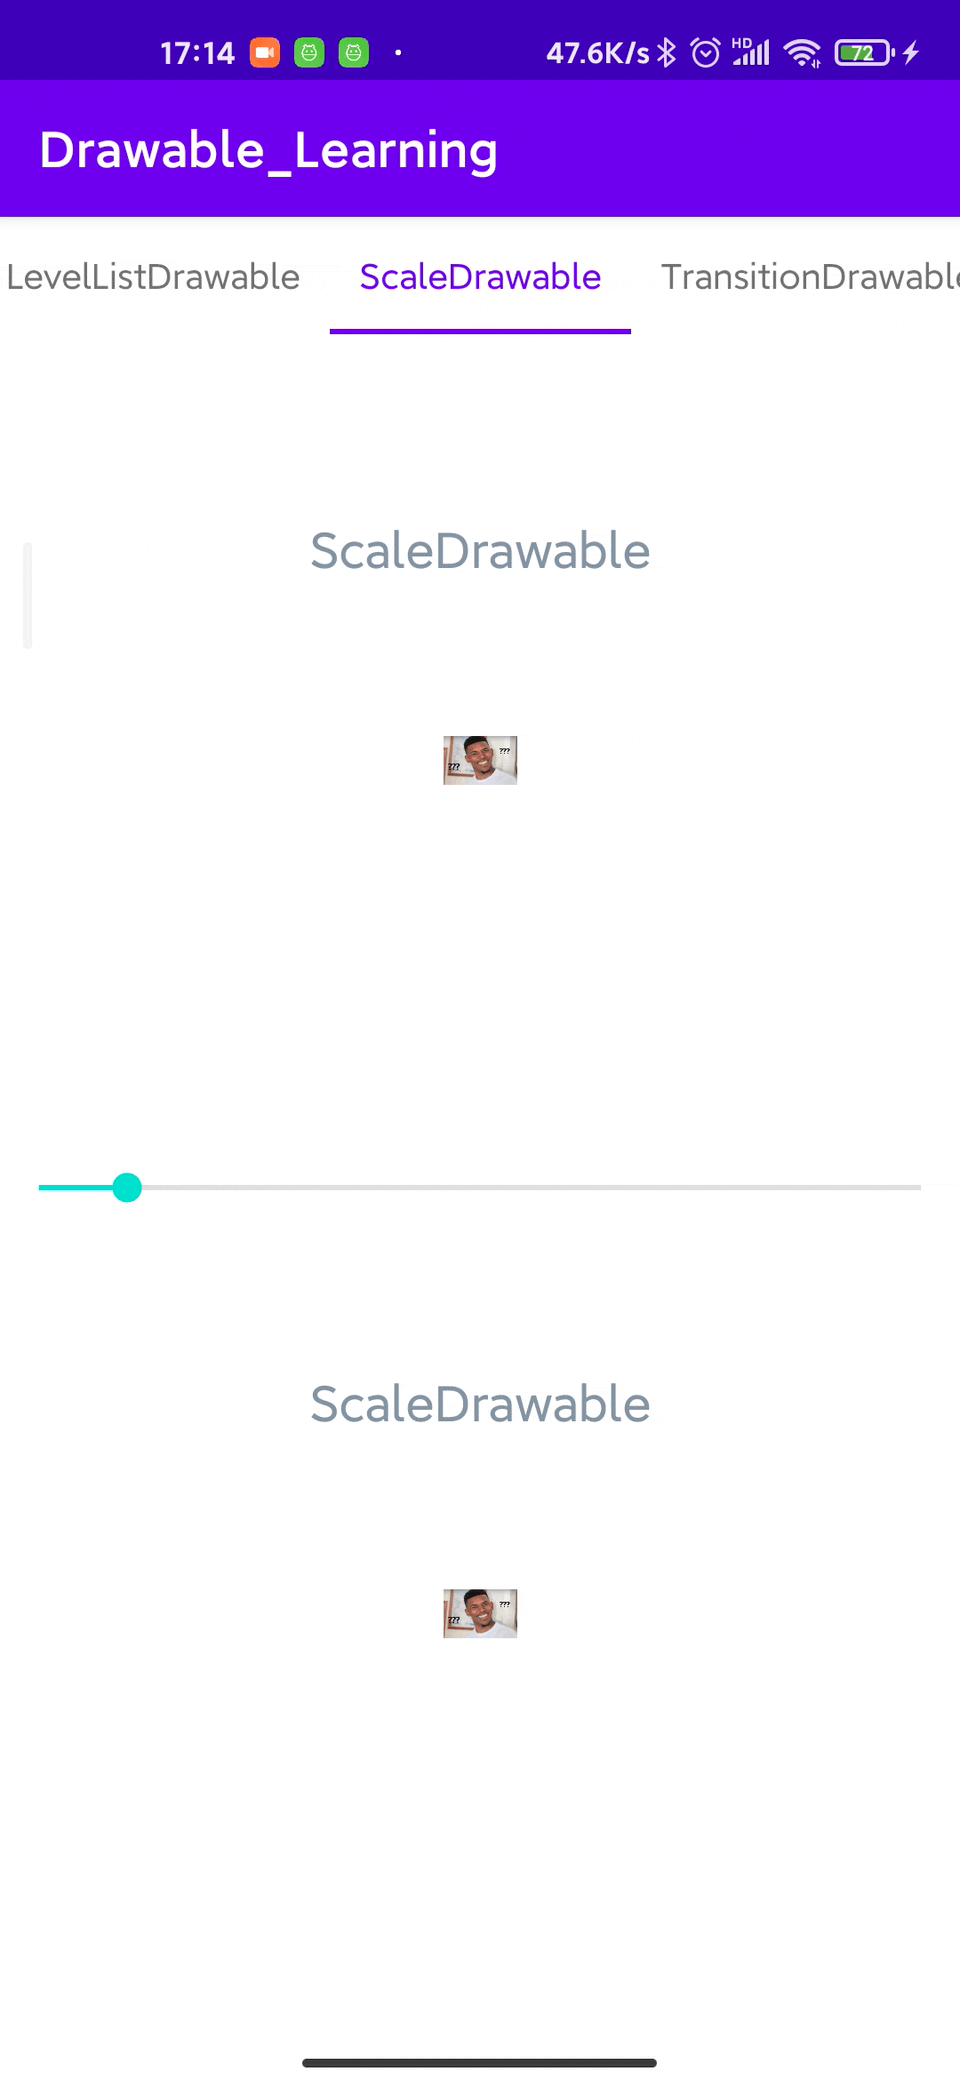 ScaleDrawable